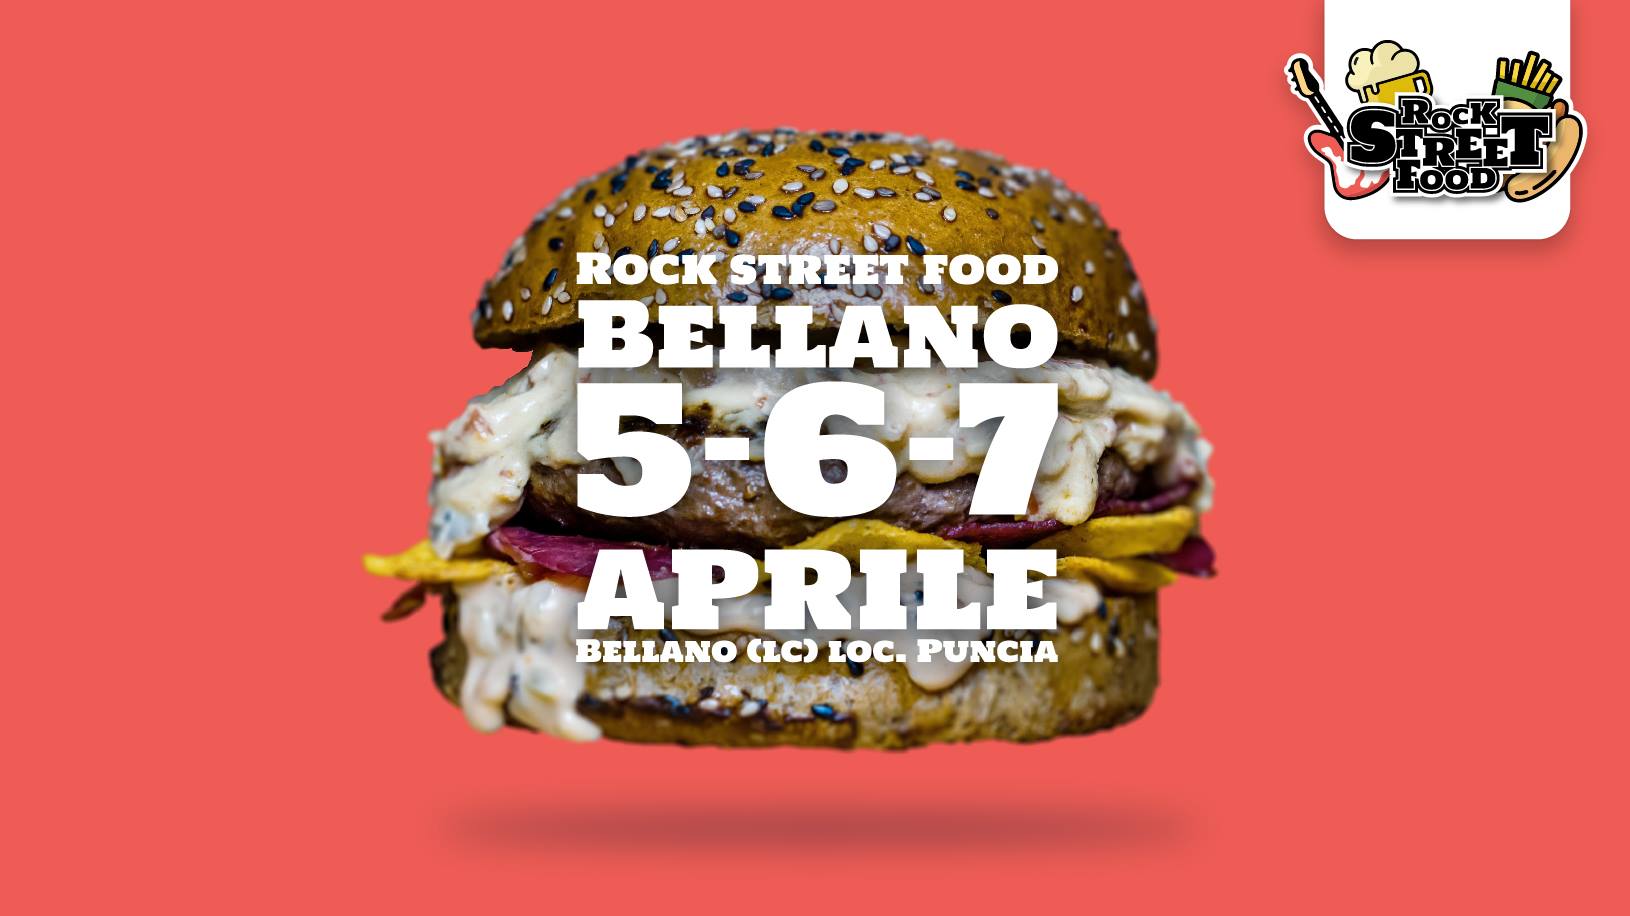 5 6 7 aprile 2019 Rock Street Food, Bellano. Herba Monstrum, panini, piatti vegetariani, birre artigianali alla spina.